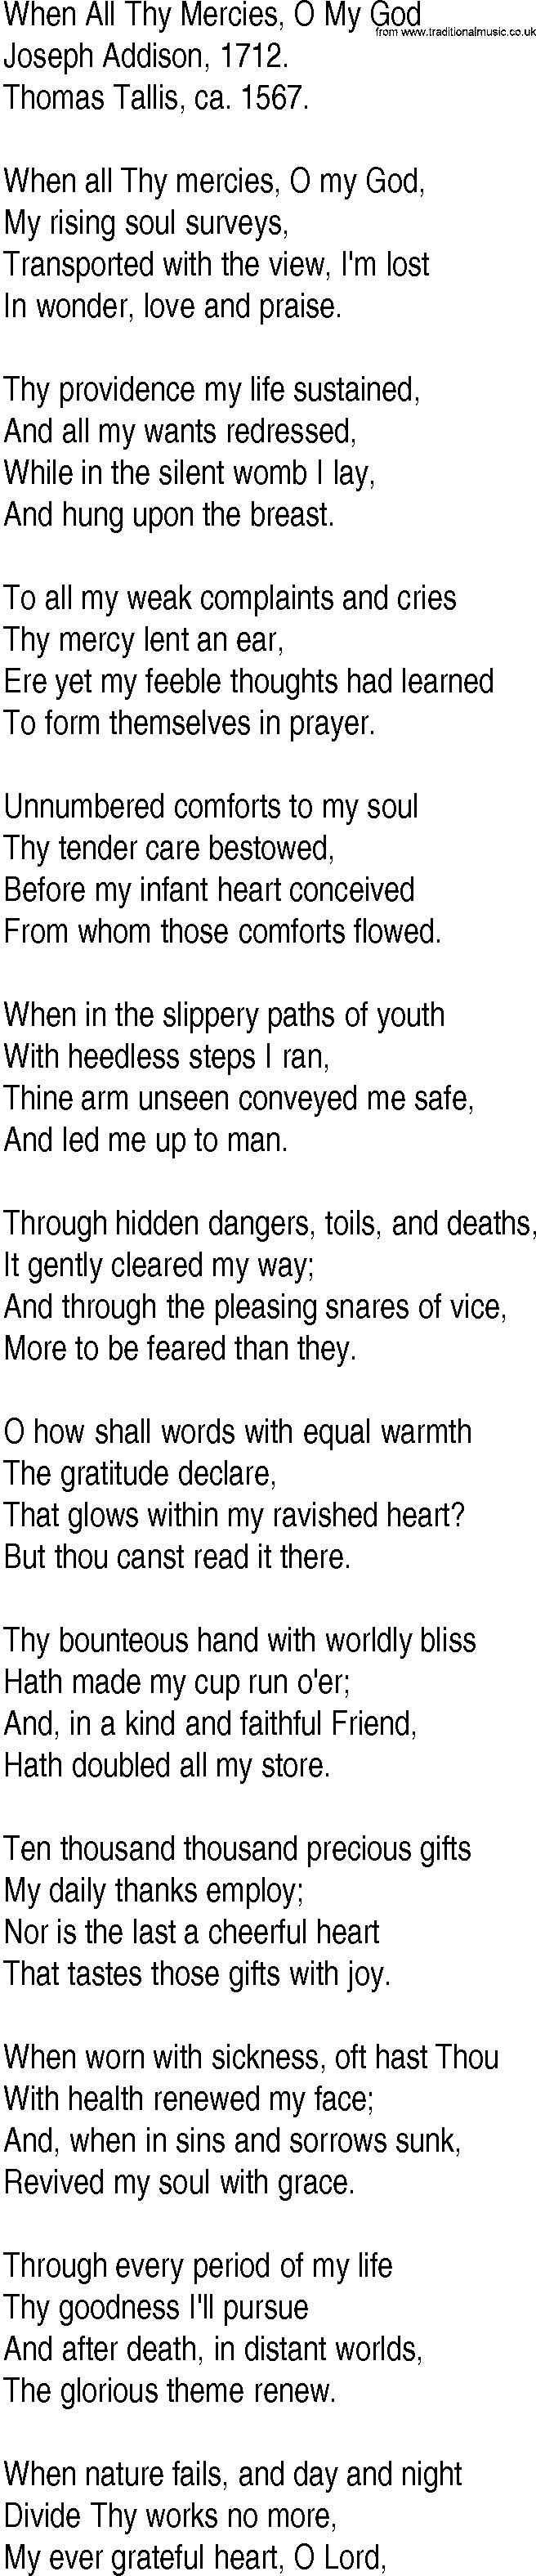 Hymn and Gospel Song: When All Thy Mercies, O My God by Joseph Addison lyrics